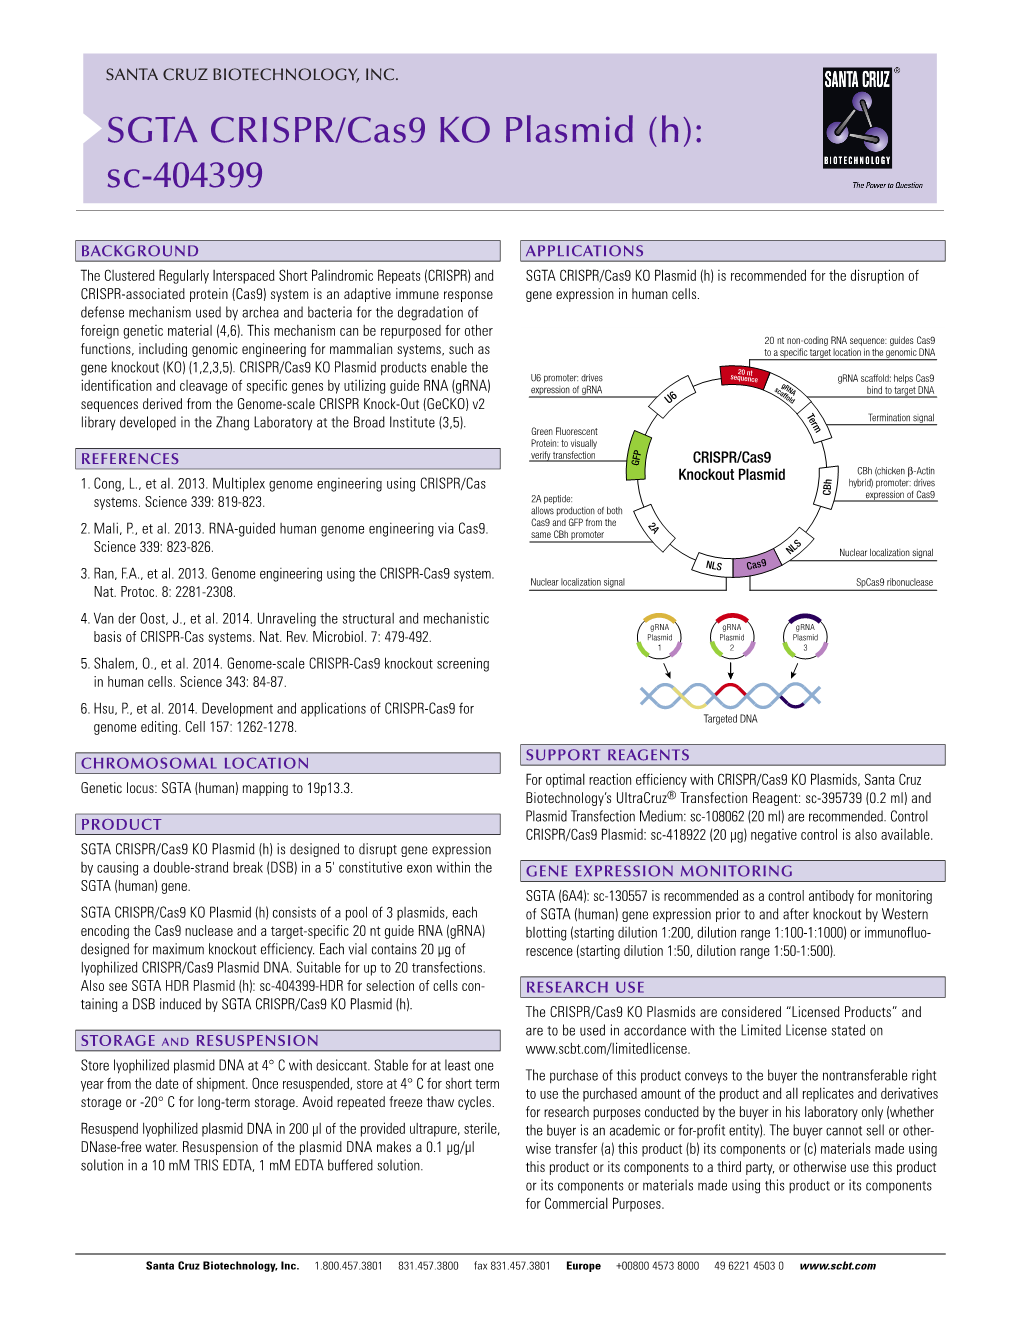 SGTA CRISPR/Cas9 KO Plasmid (H): Sc-404399